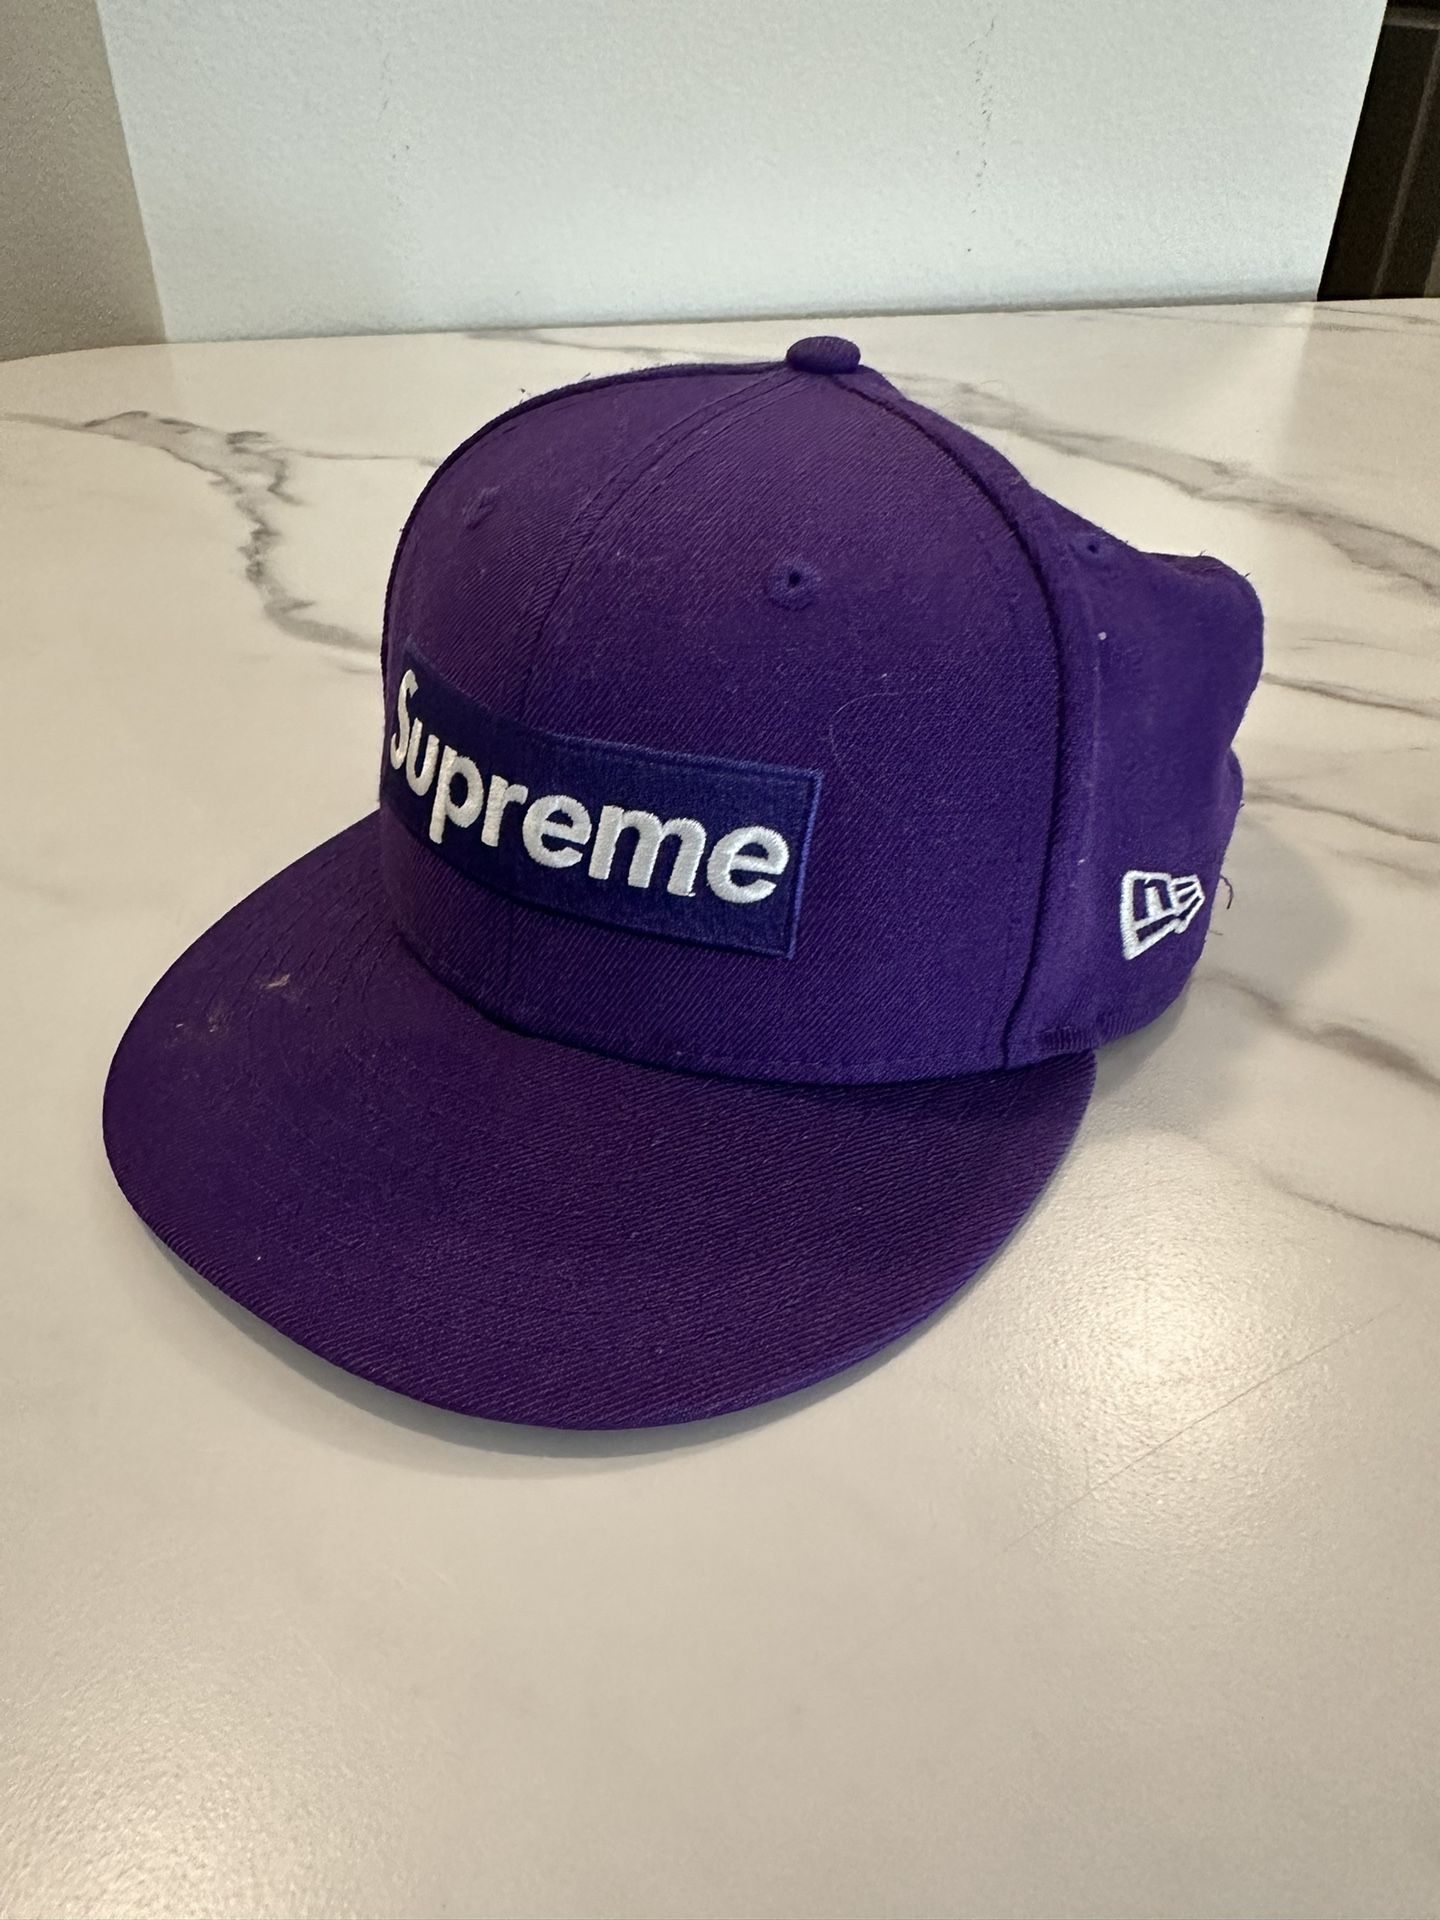 Supreme Hat 7/12